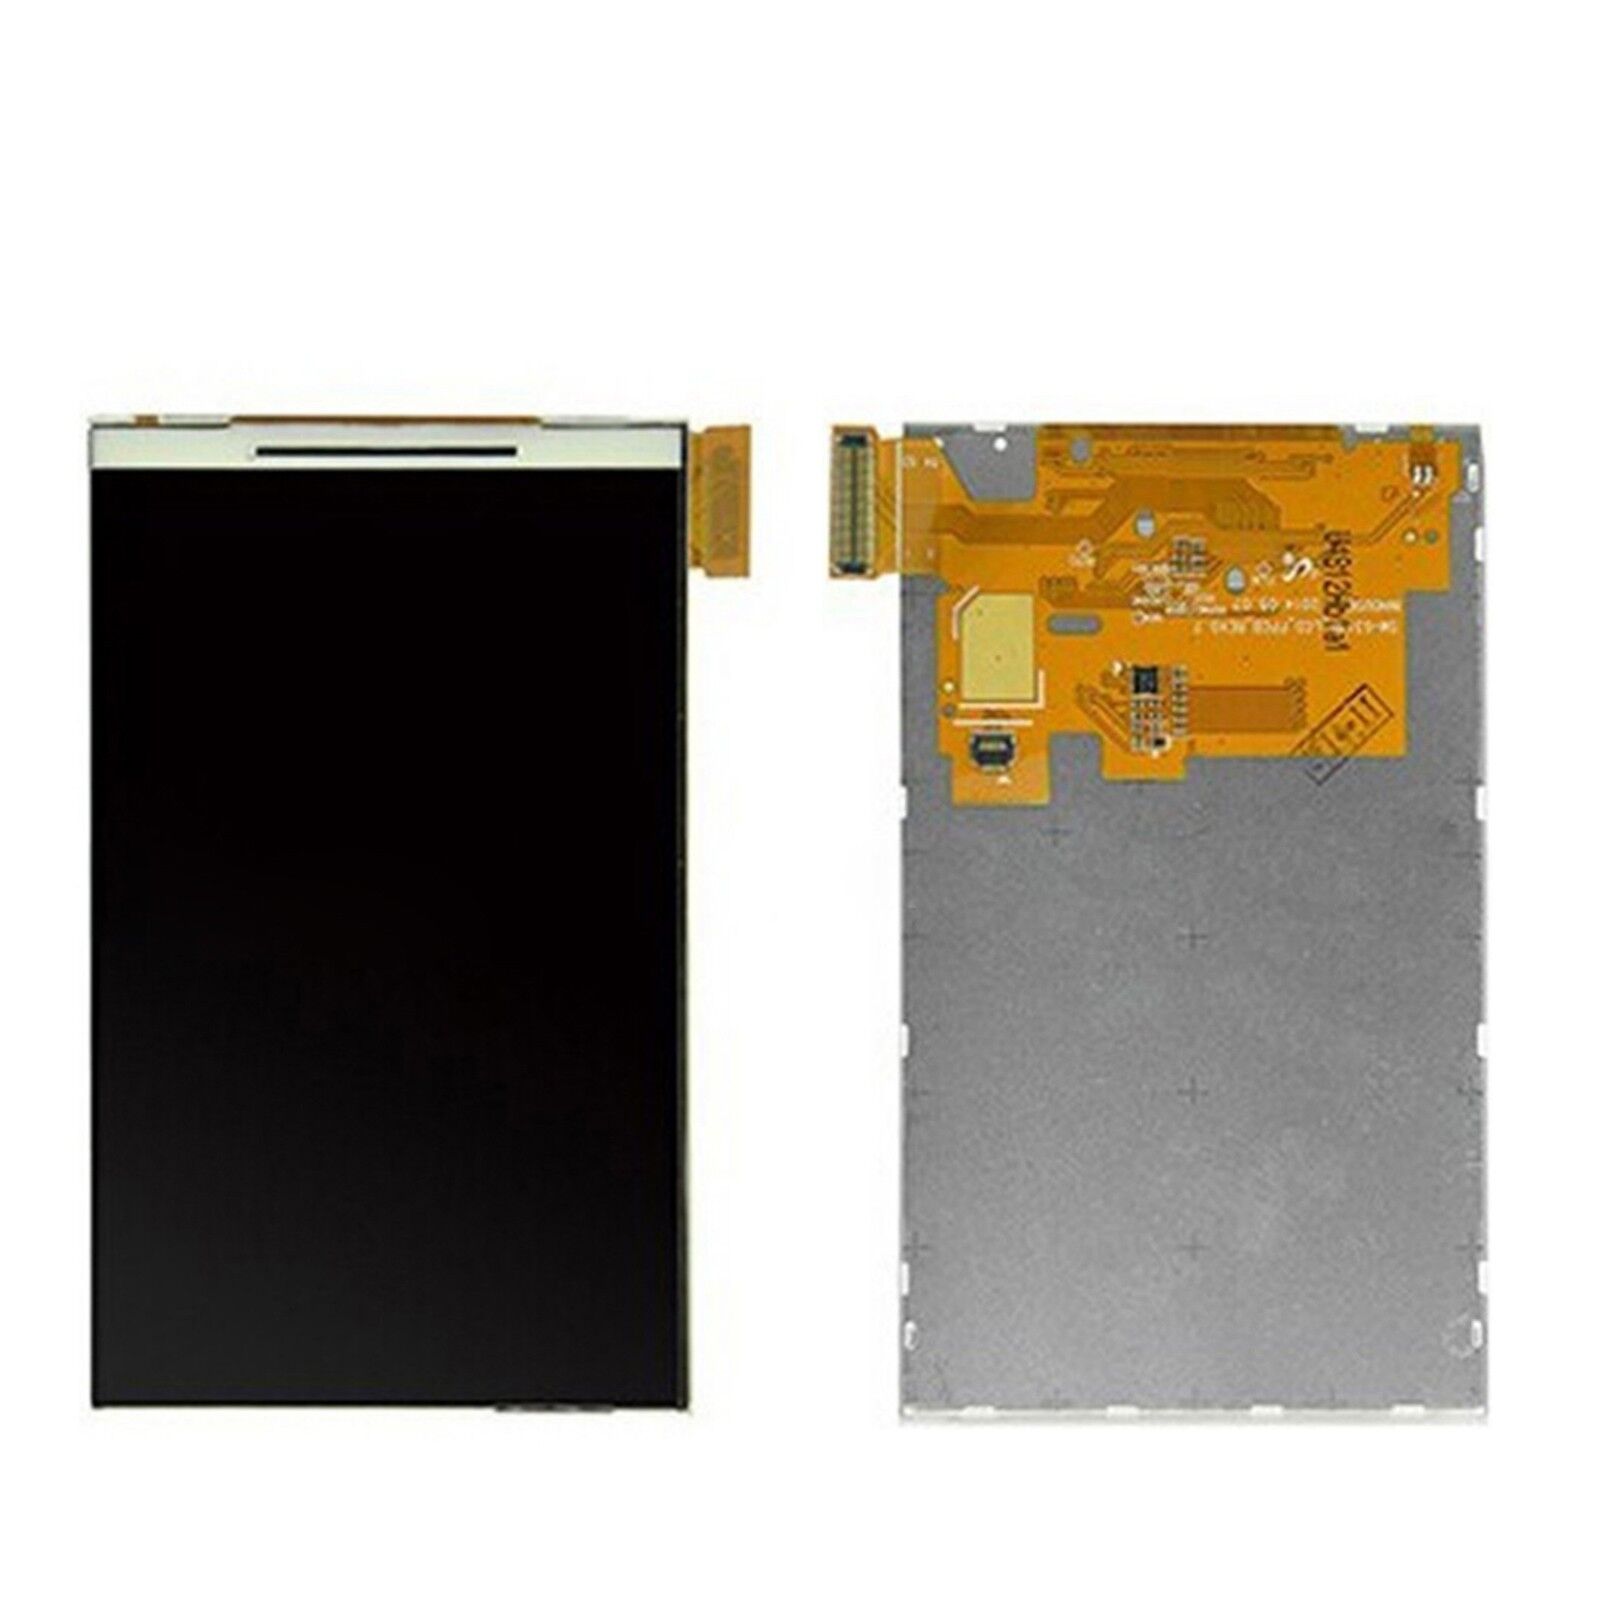 DIGITAL BAY RICAMBIO LCD DISPLAY SCHERMO PER SAMSUNG GALAXY ACE 4 Lite SM-G313H